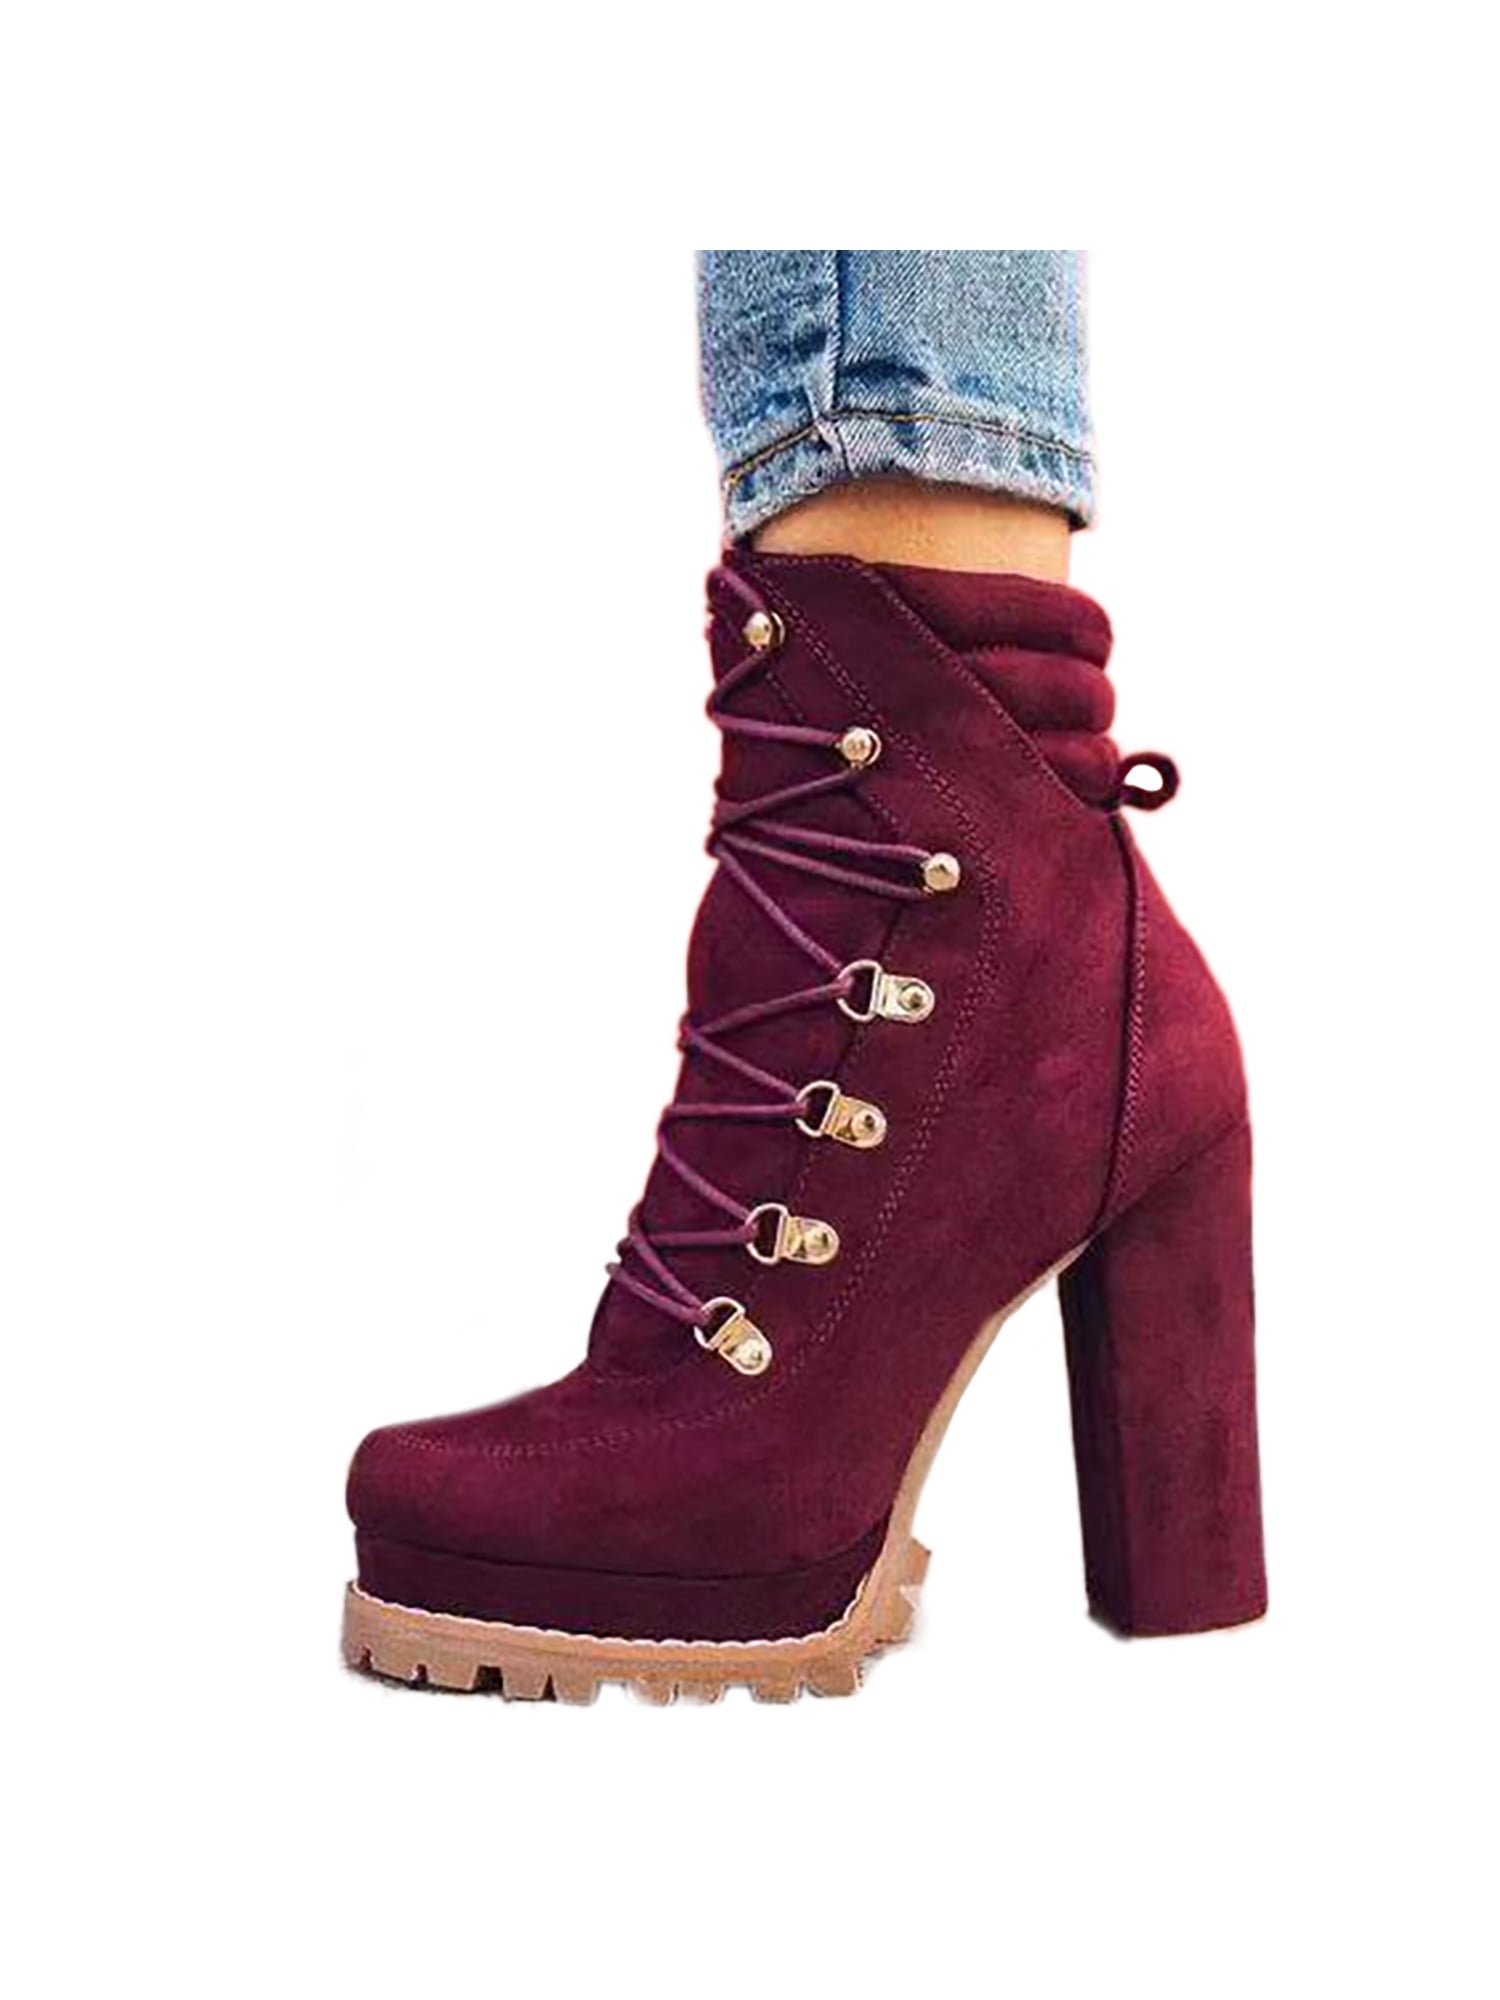 Ferndule Womens Faux Suede Ankle Boots Walking Mid Top Round Toe Block Heels Bootie Comfort Casual Winter Shoes Wine Red 9 0316df8f 556d 4241 9962 e6603e90ca19.3785d1d95bf83fd9e0f676c0ec8a7900